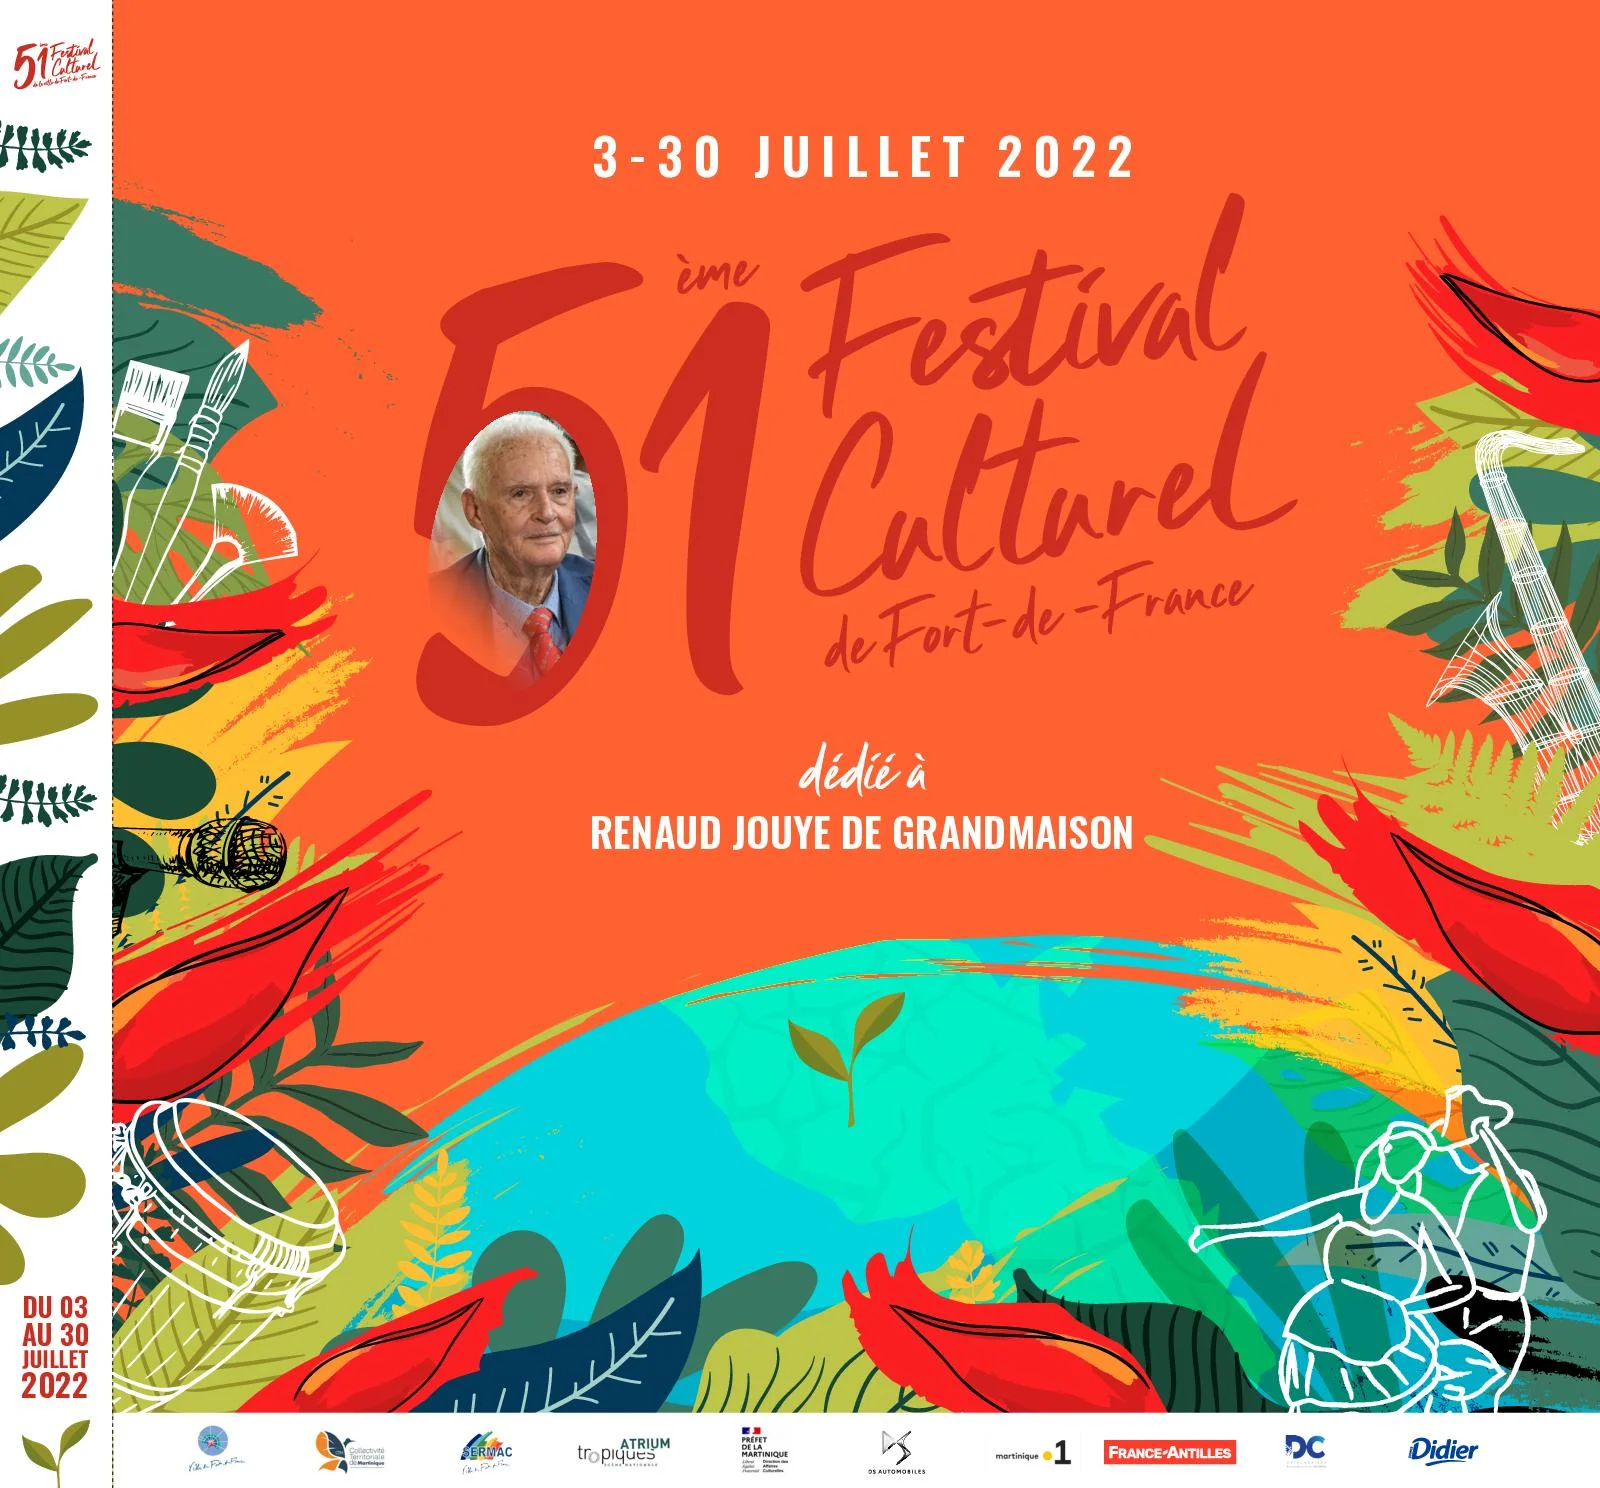 51è festival culturel de Fort de france